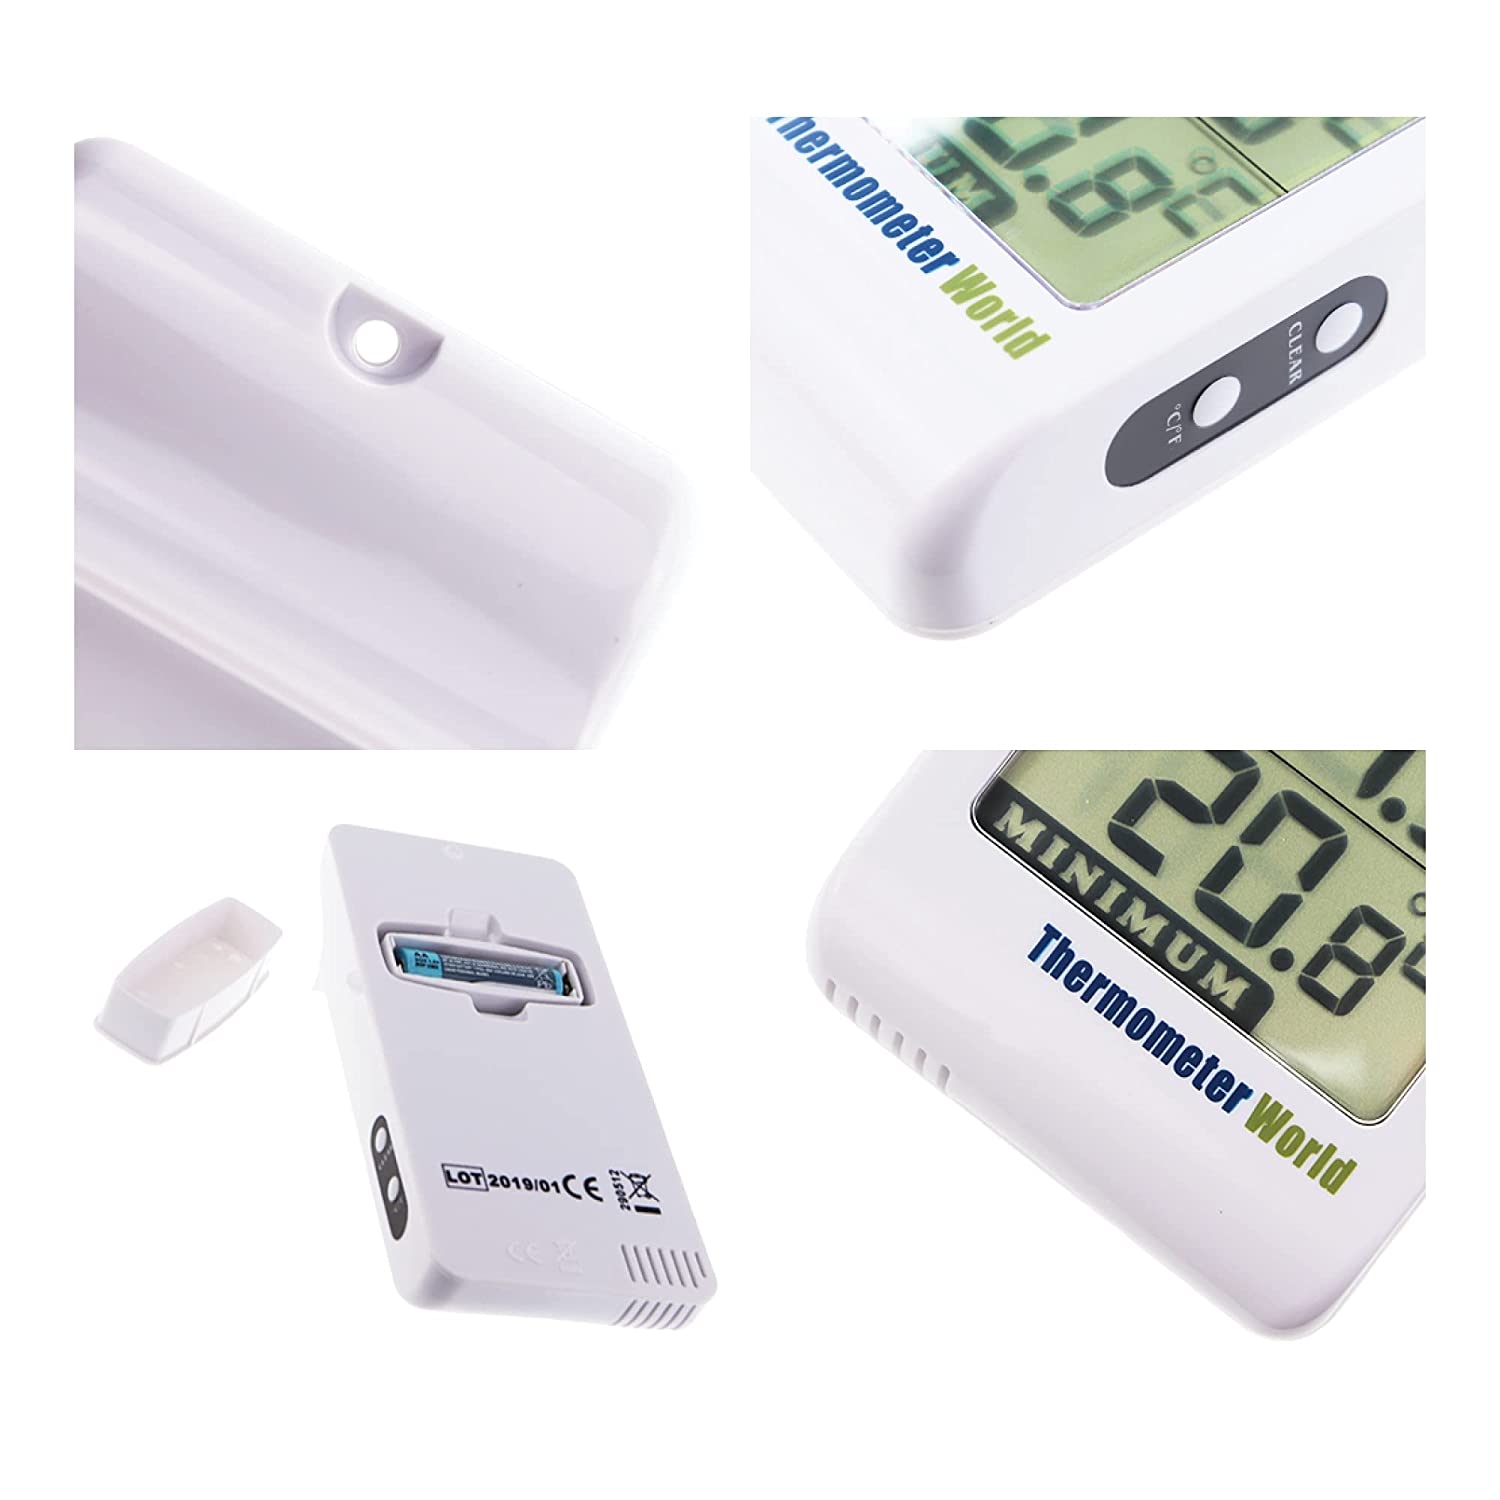 Digital Thermometer for Monitoring Maximum and Minimum